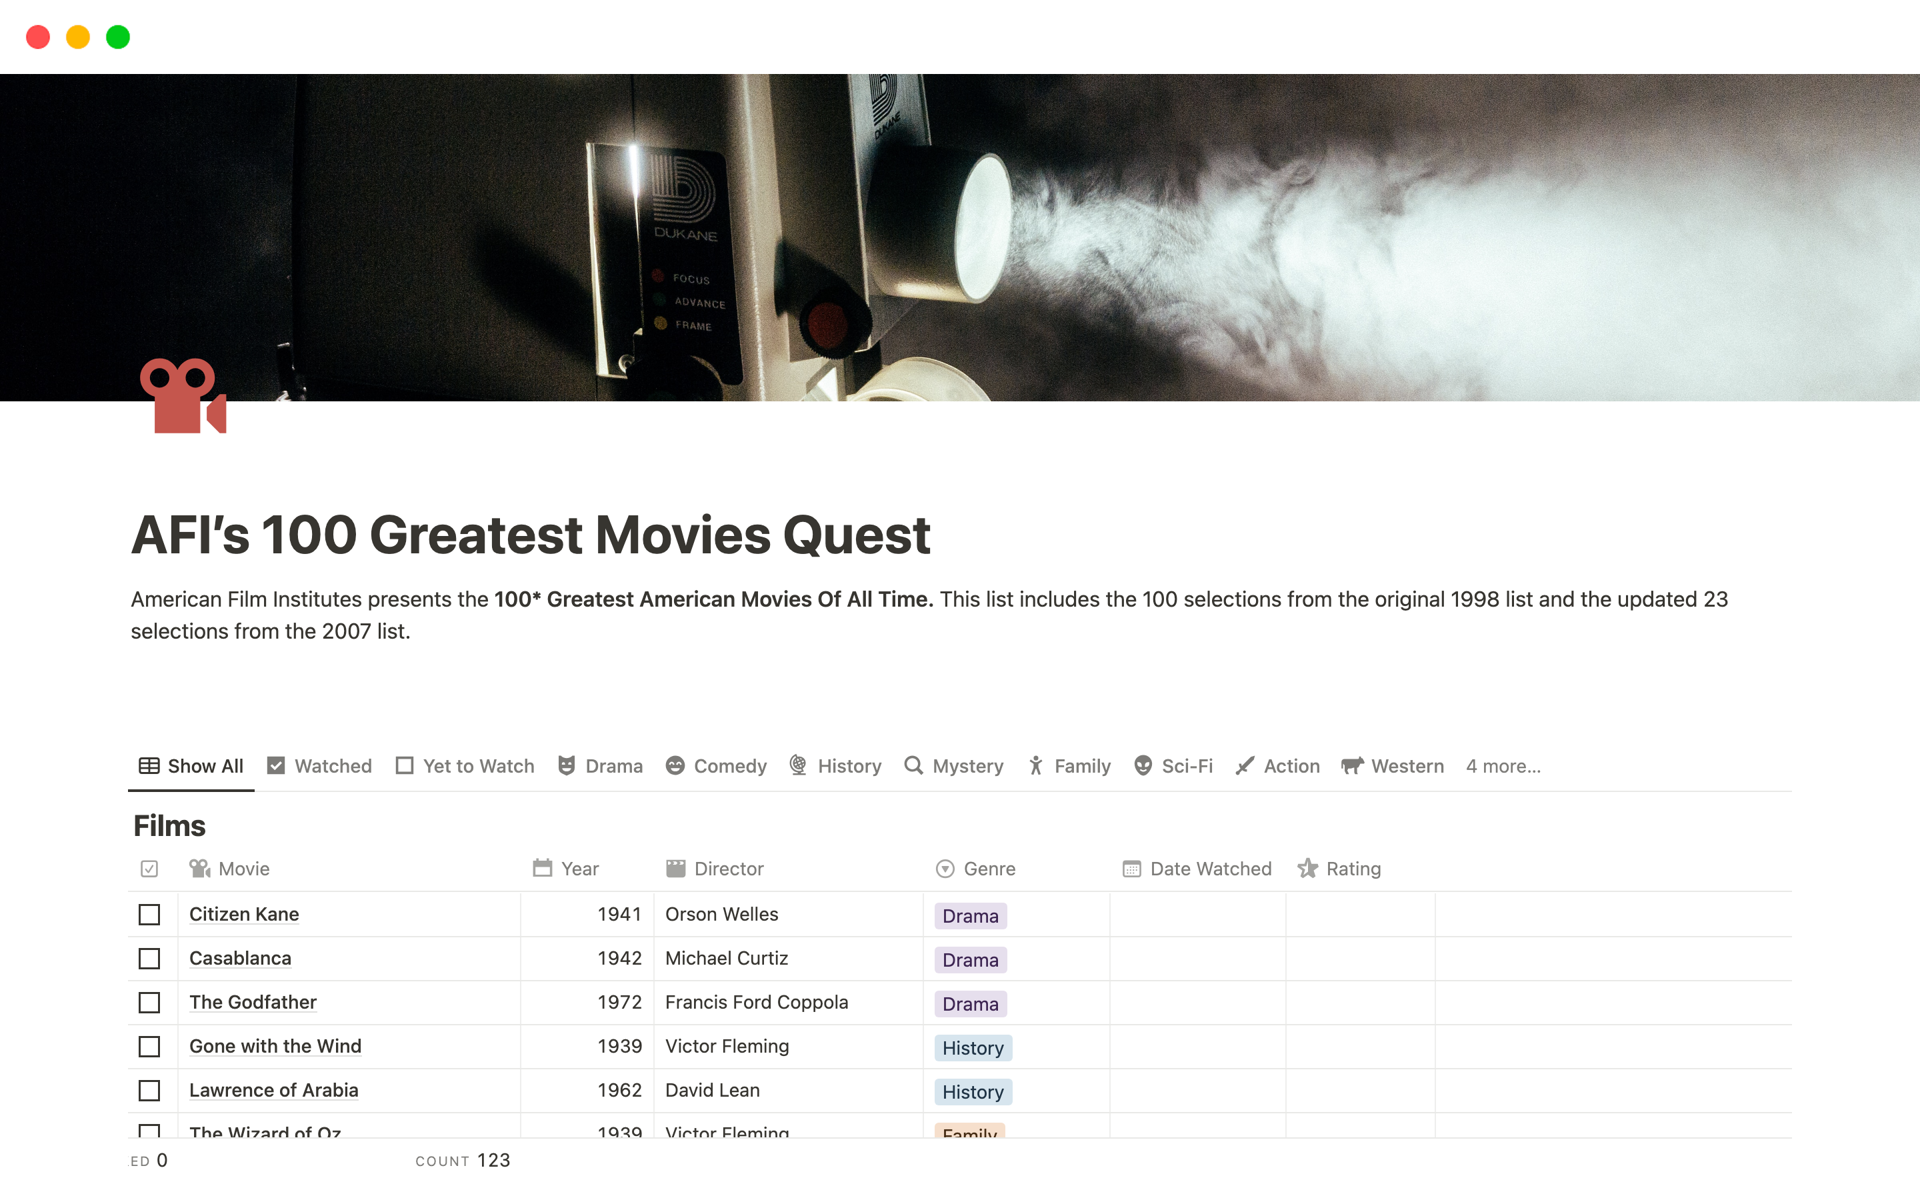 Vista previa de plantilla para AFI's 100 Greatest Movies Quest